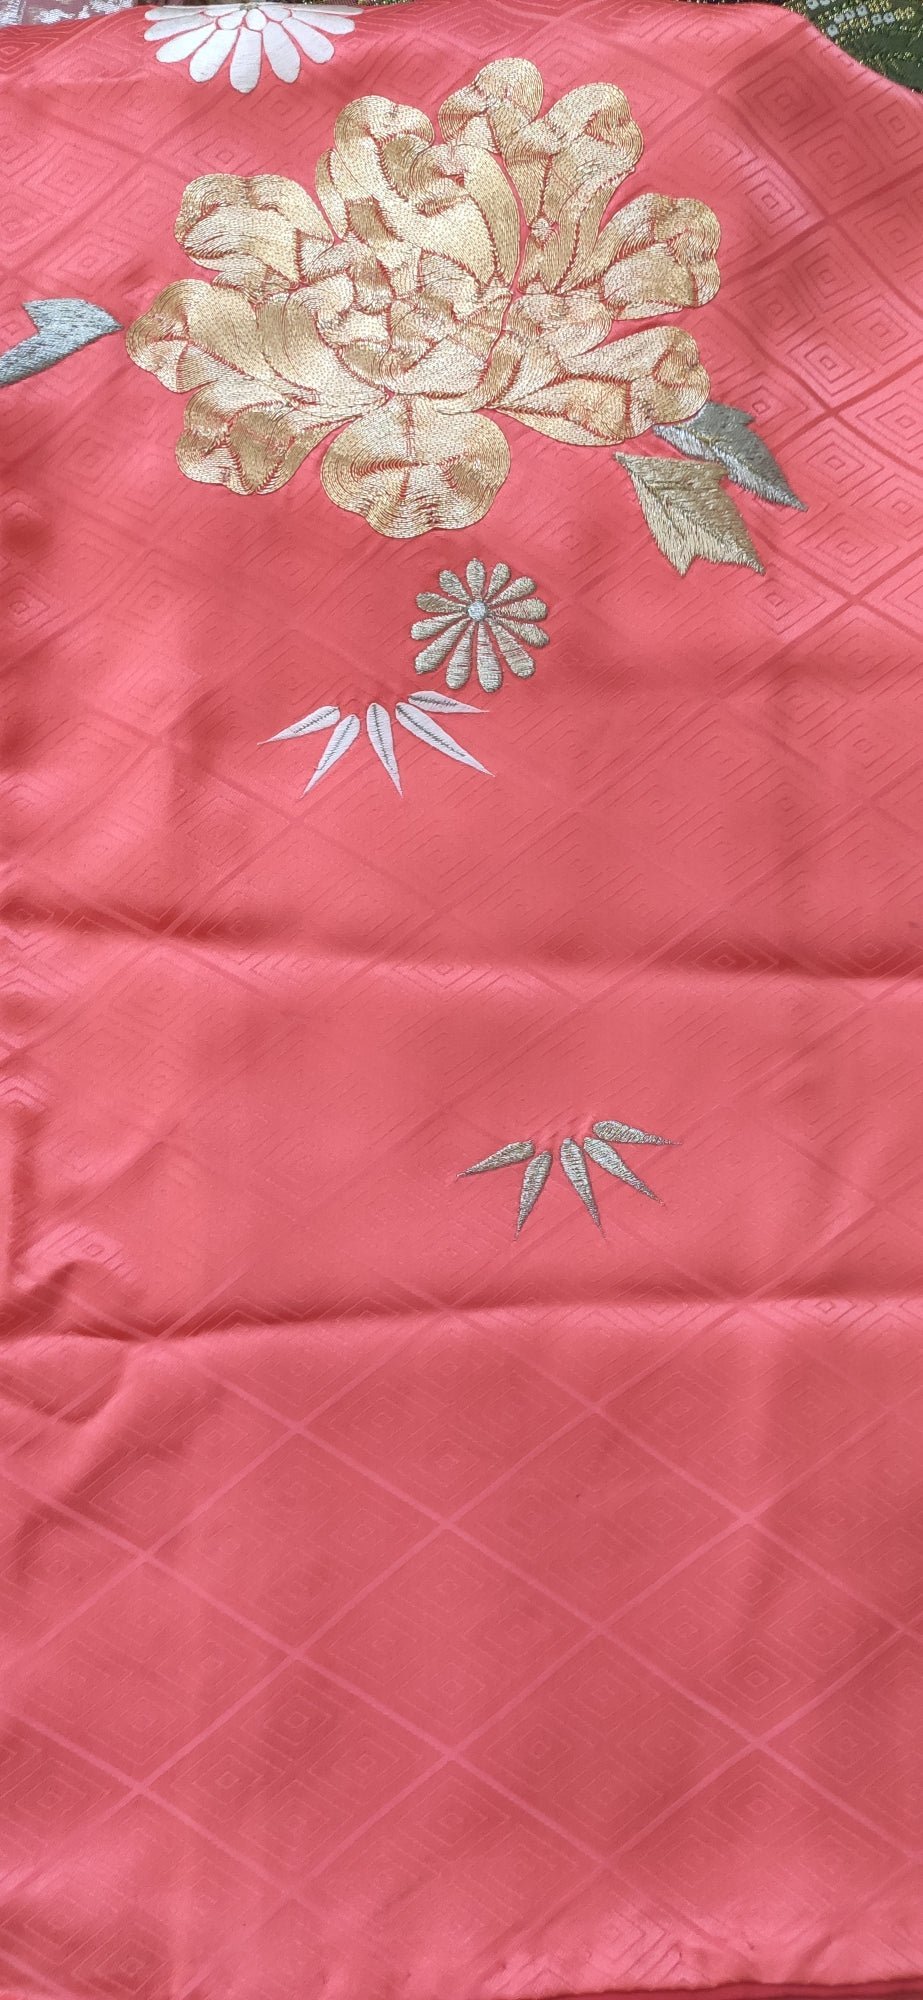 Kimono Fabrics - Kimono Koi